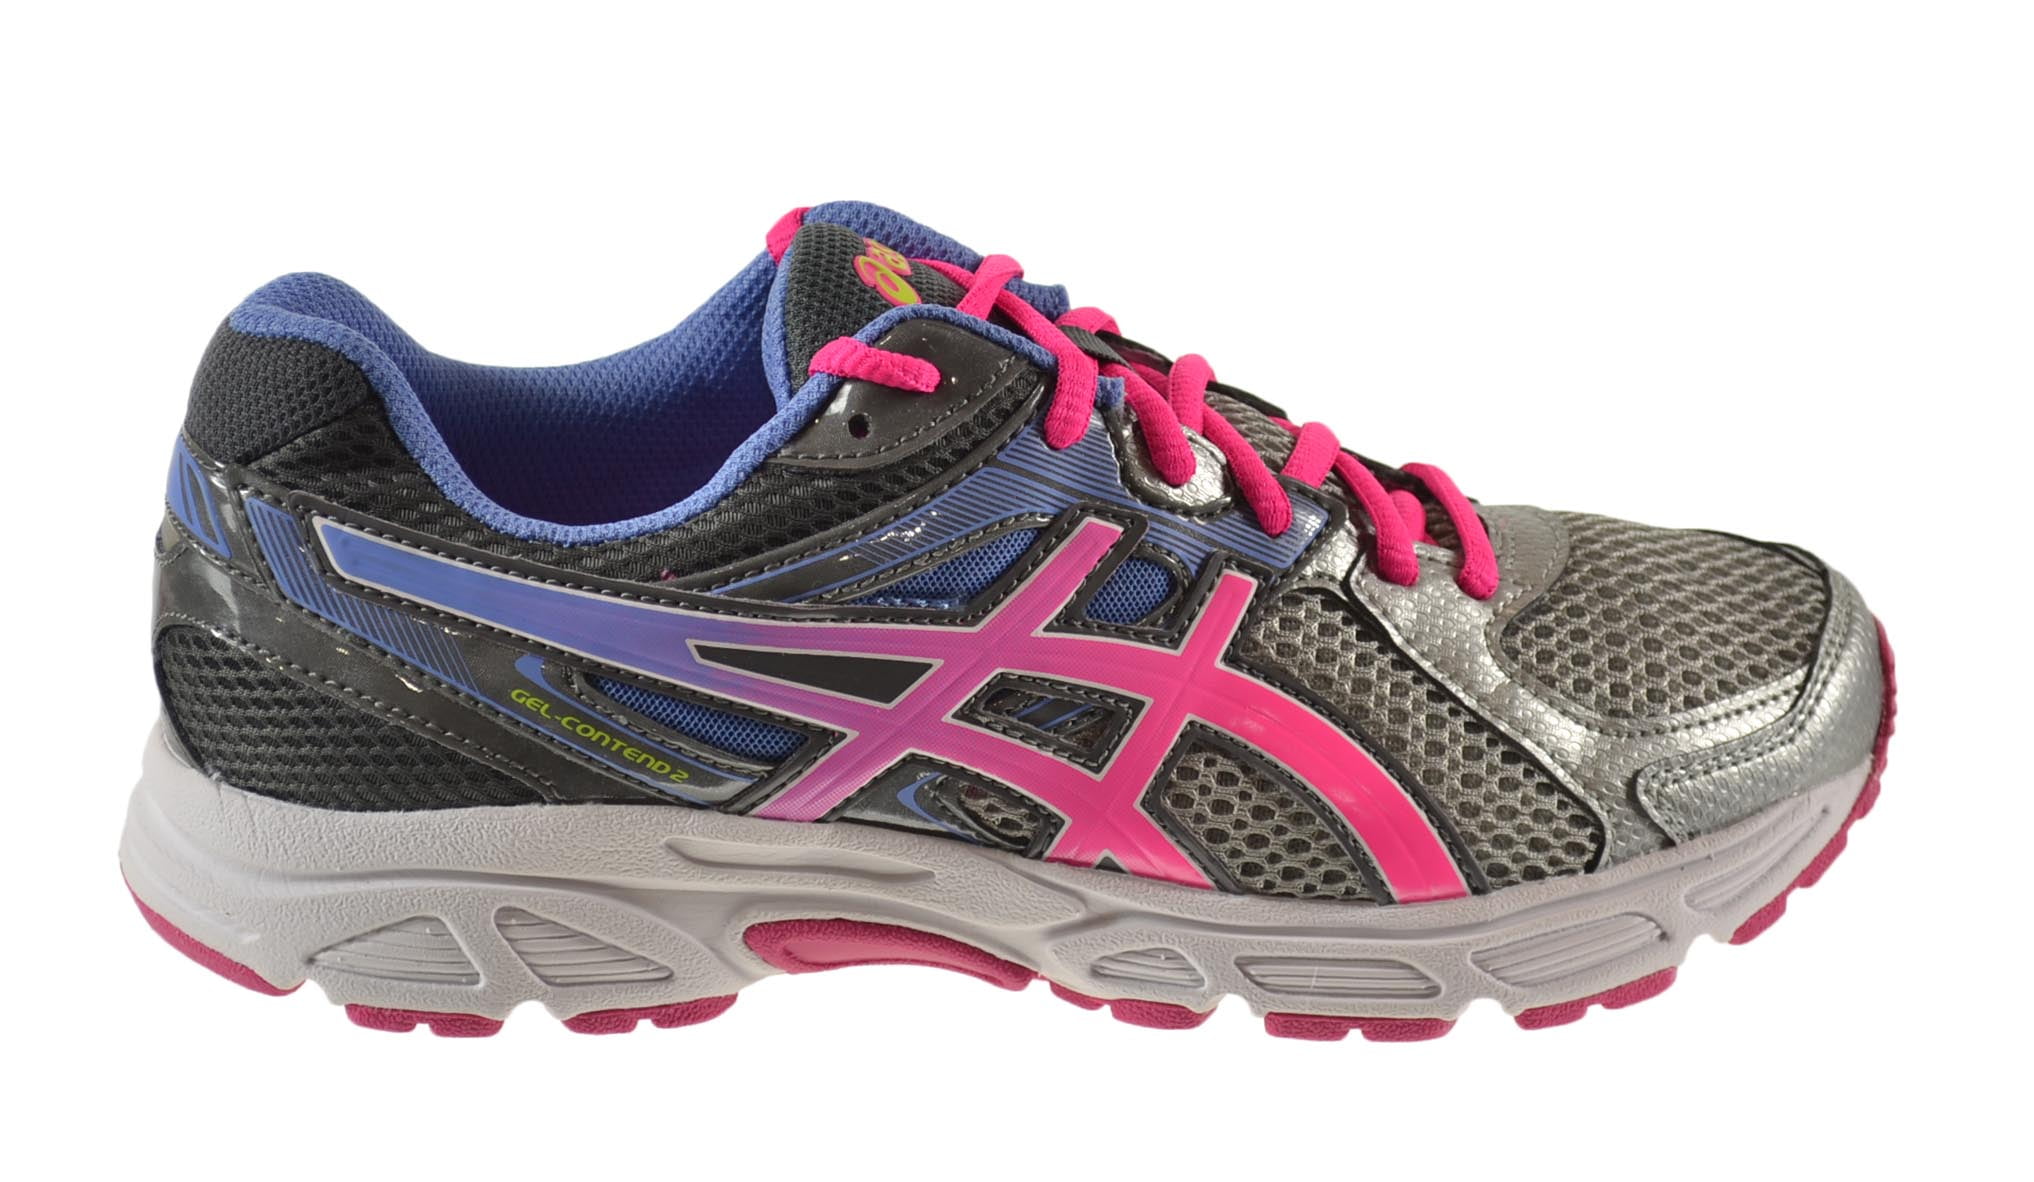 Asics Gel Contend (GS) Big Kids Running Shoes Lightning/Hot Pink/Peri c405n-9135 - Walmart.com